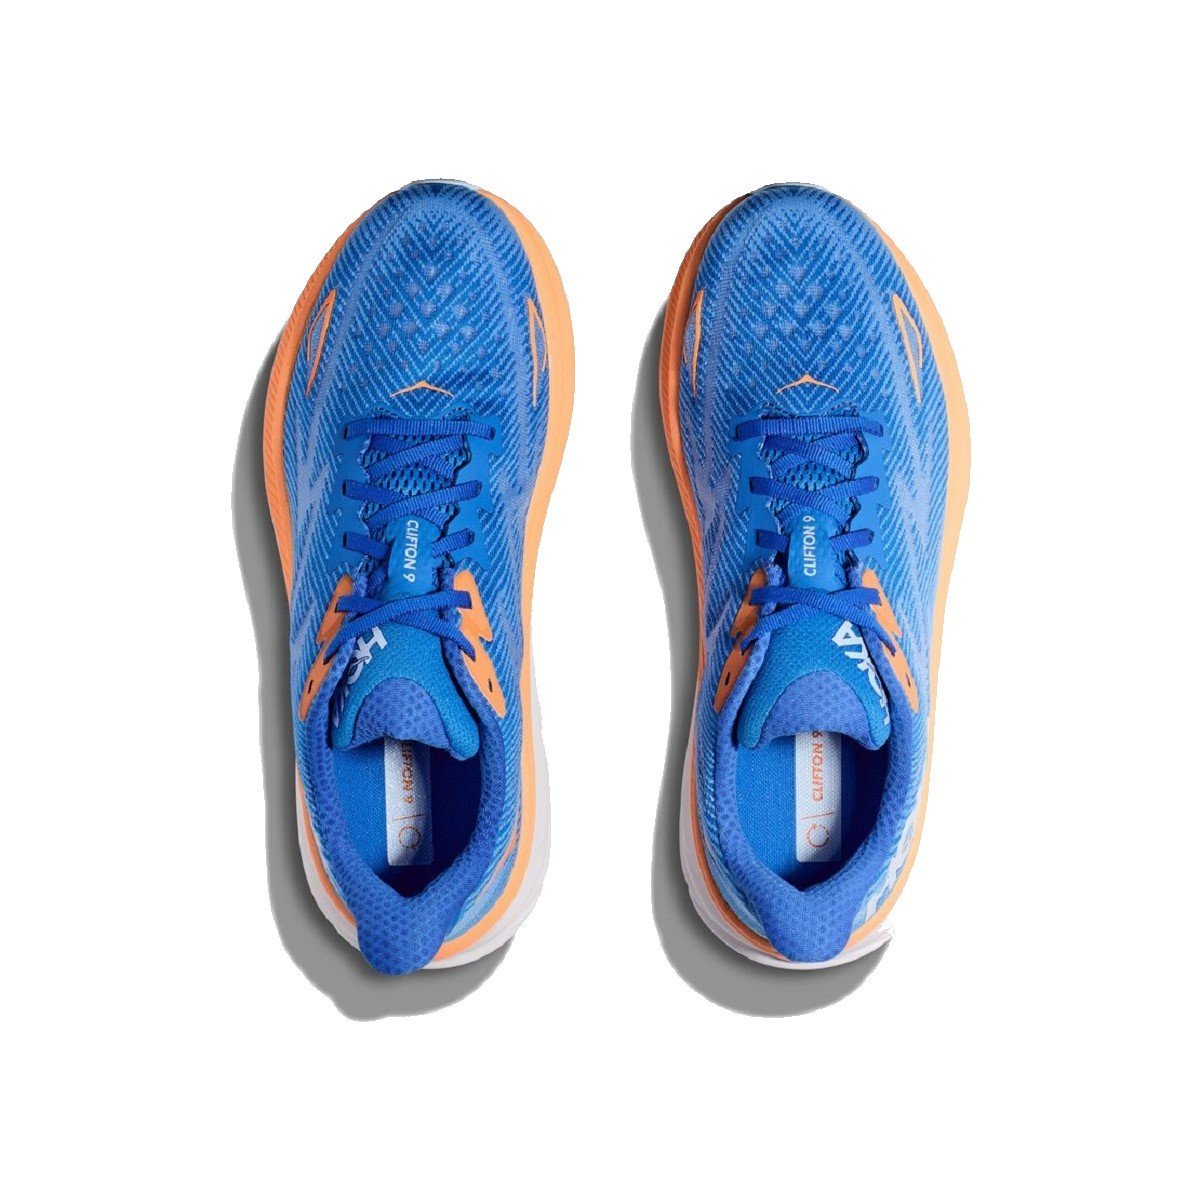 Topánky Hoka Clifton 9 M - blue/orange